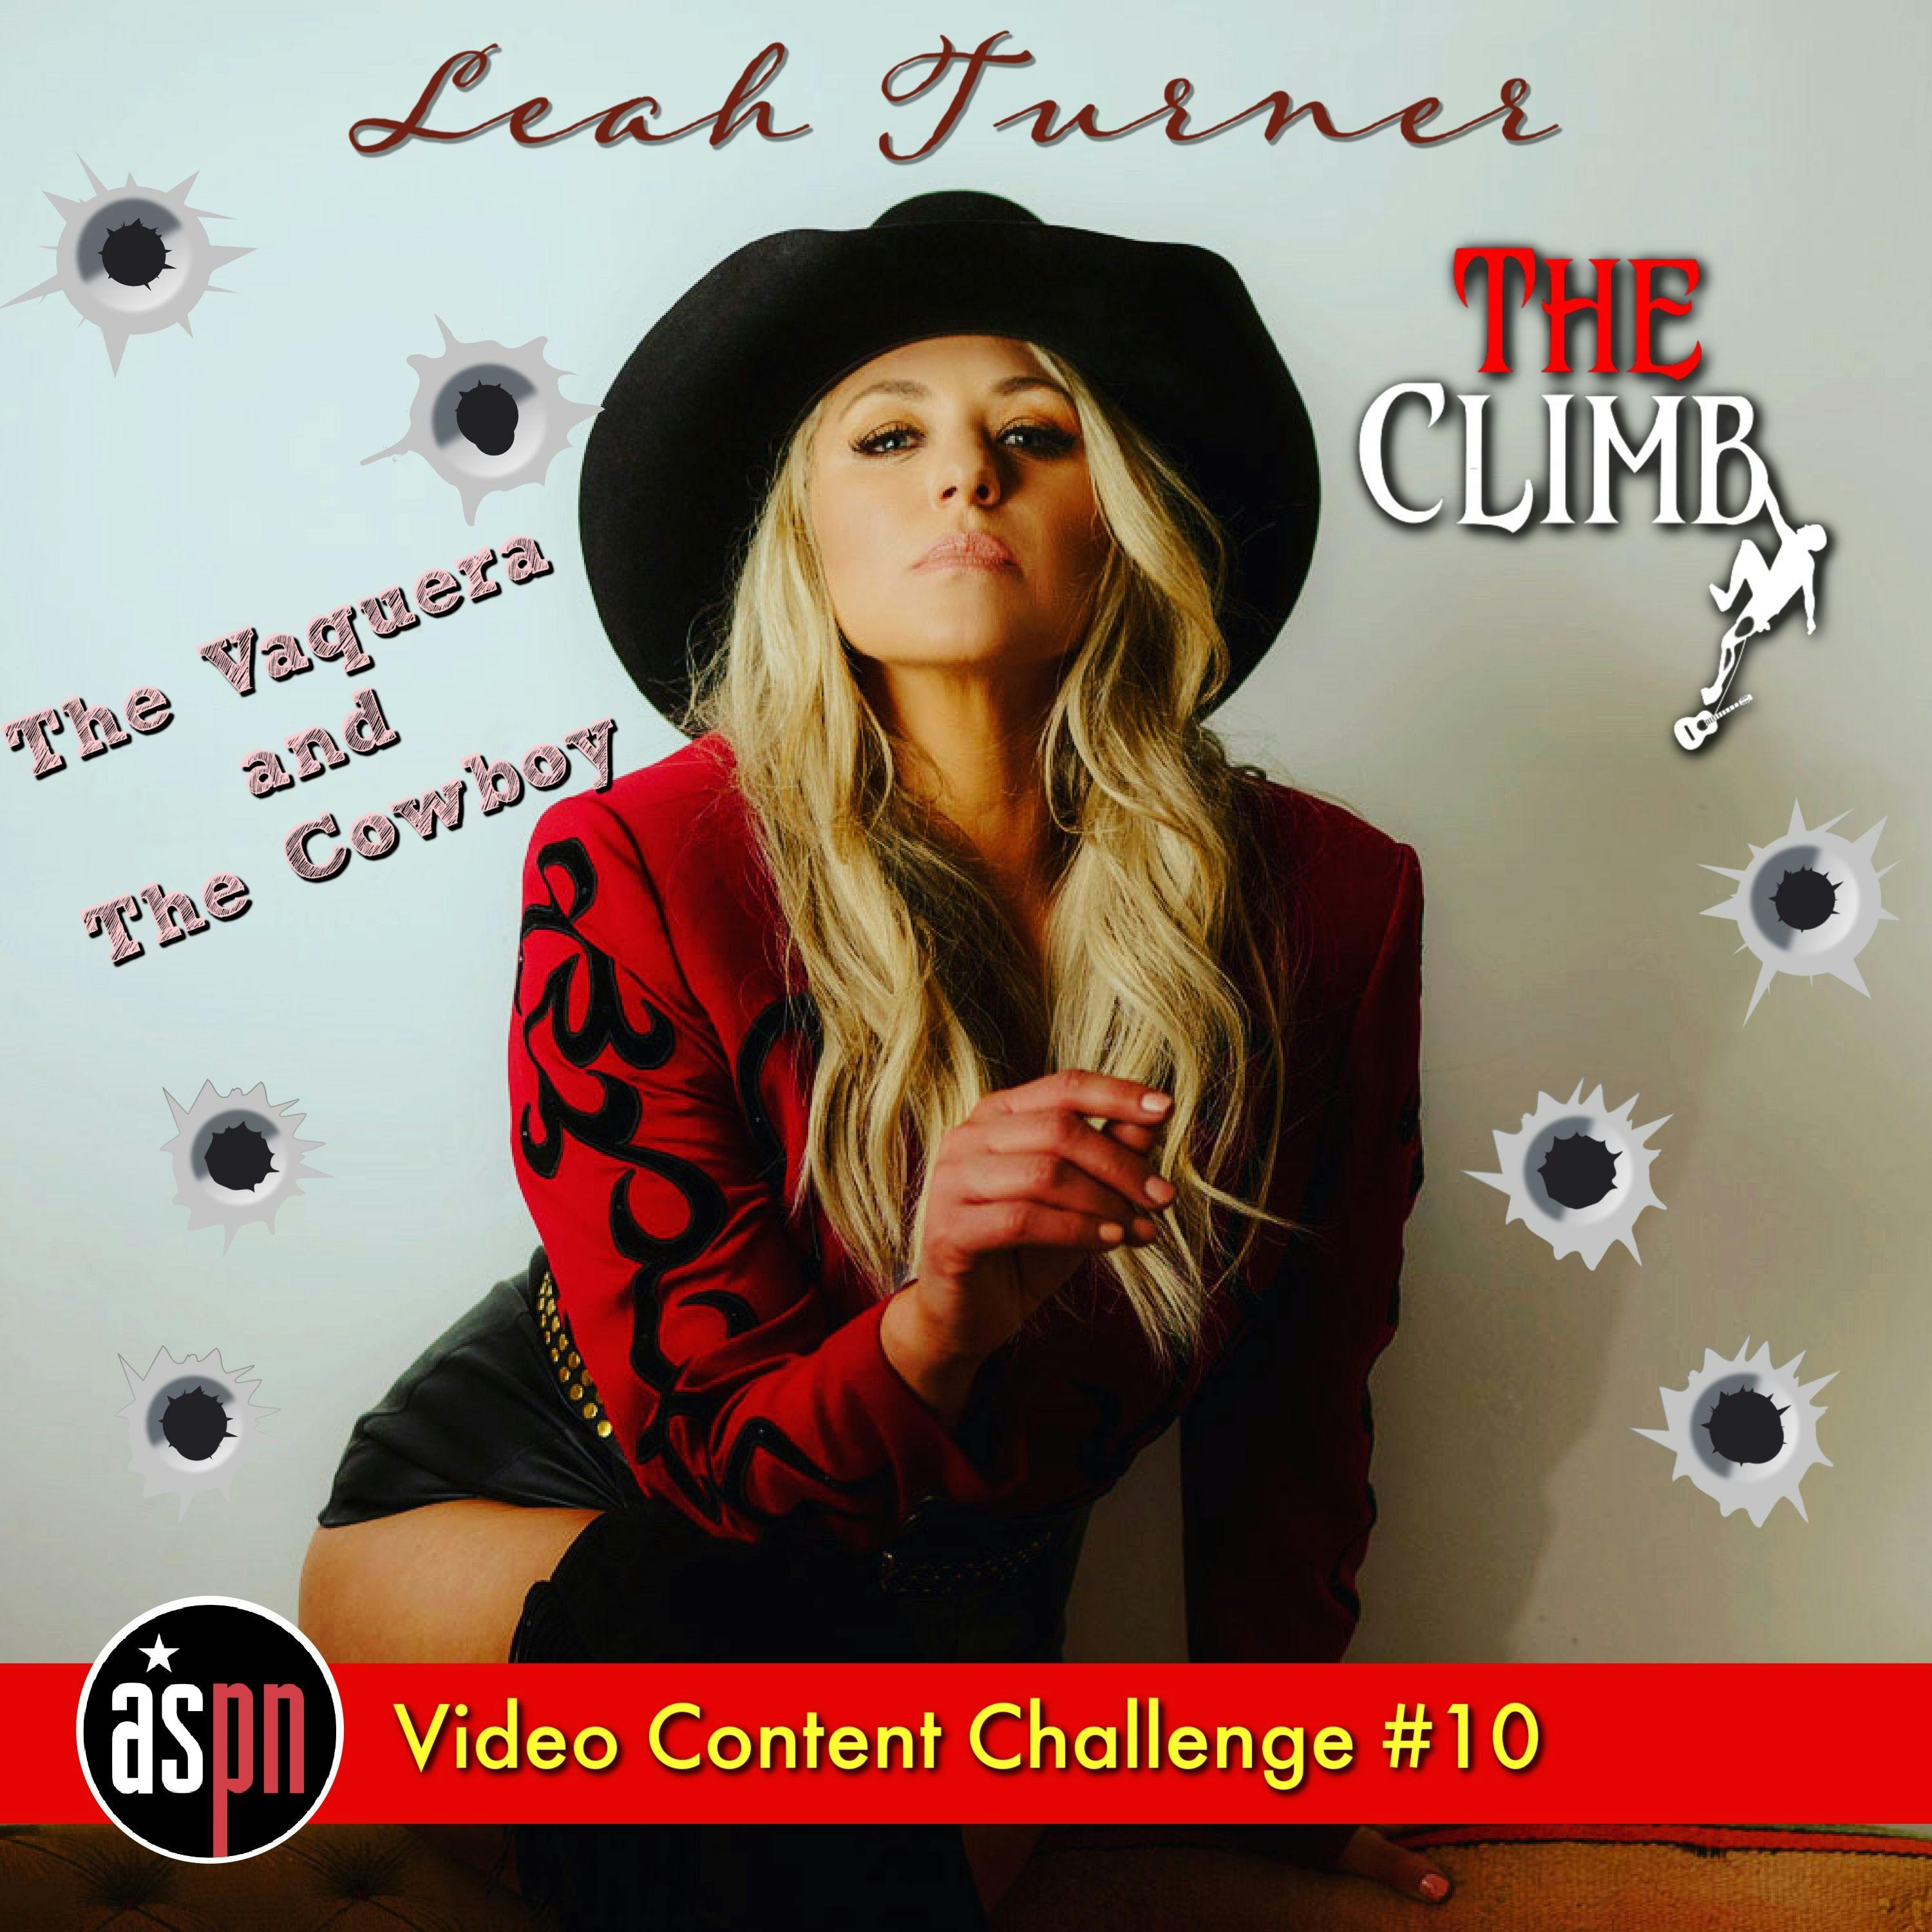 Video Content Challenge #10: 